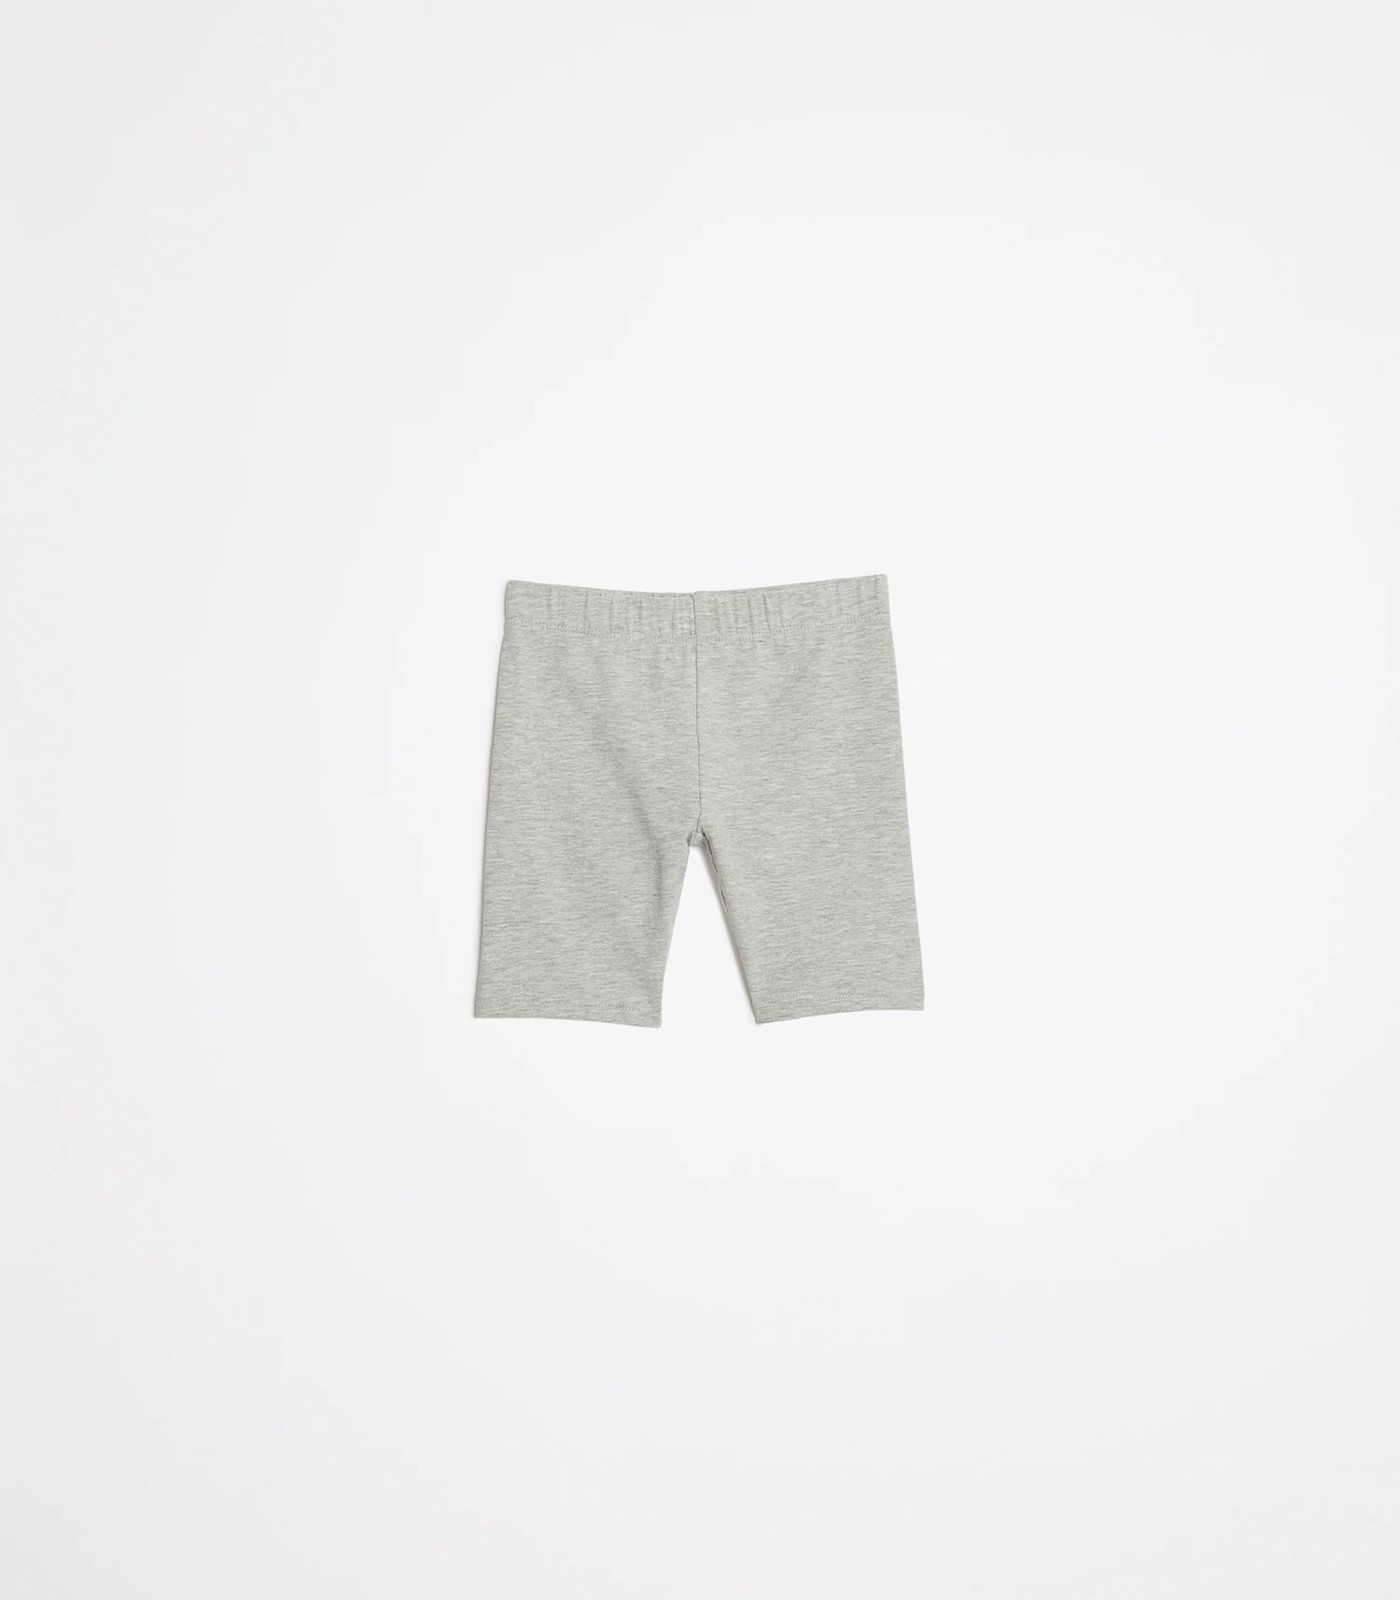 2 Pack Bike Shorts - Black / Grey | Target Australia